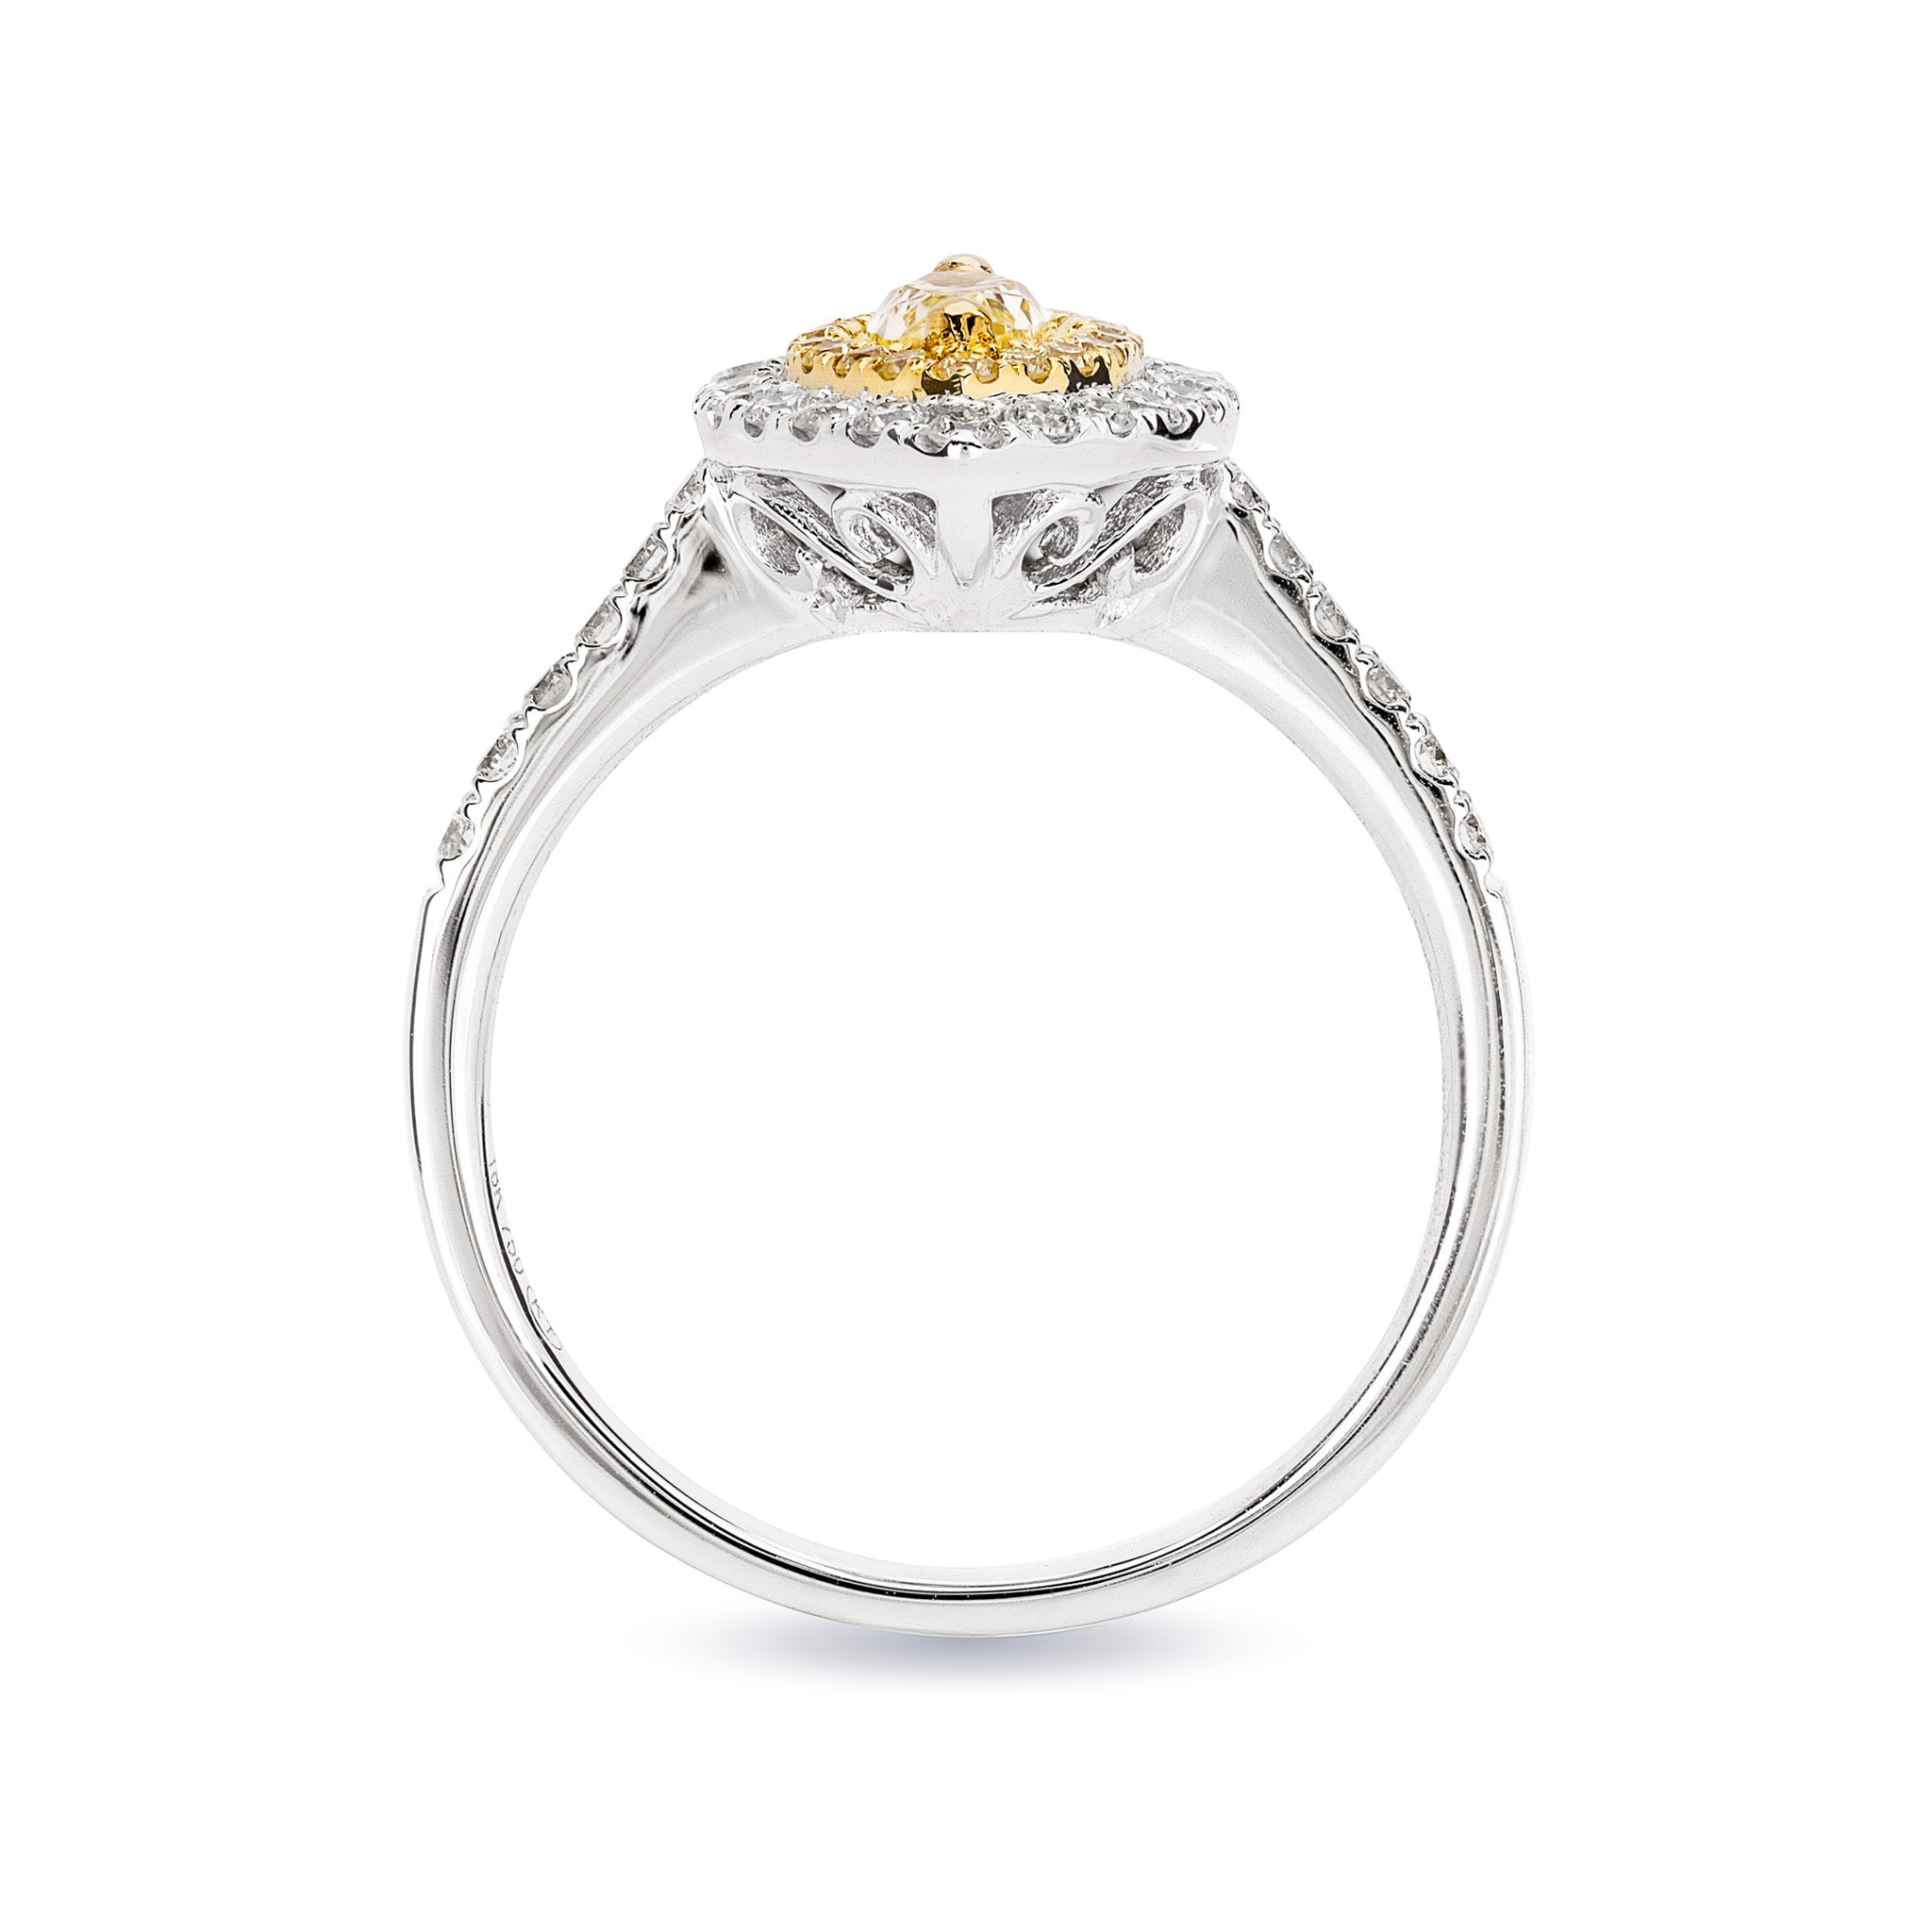 Yellow Diamond Microset Halo Ring 0.30 Carat | 18K White and Yellow Gold - SHIMANSKY.CO.ZA